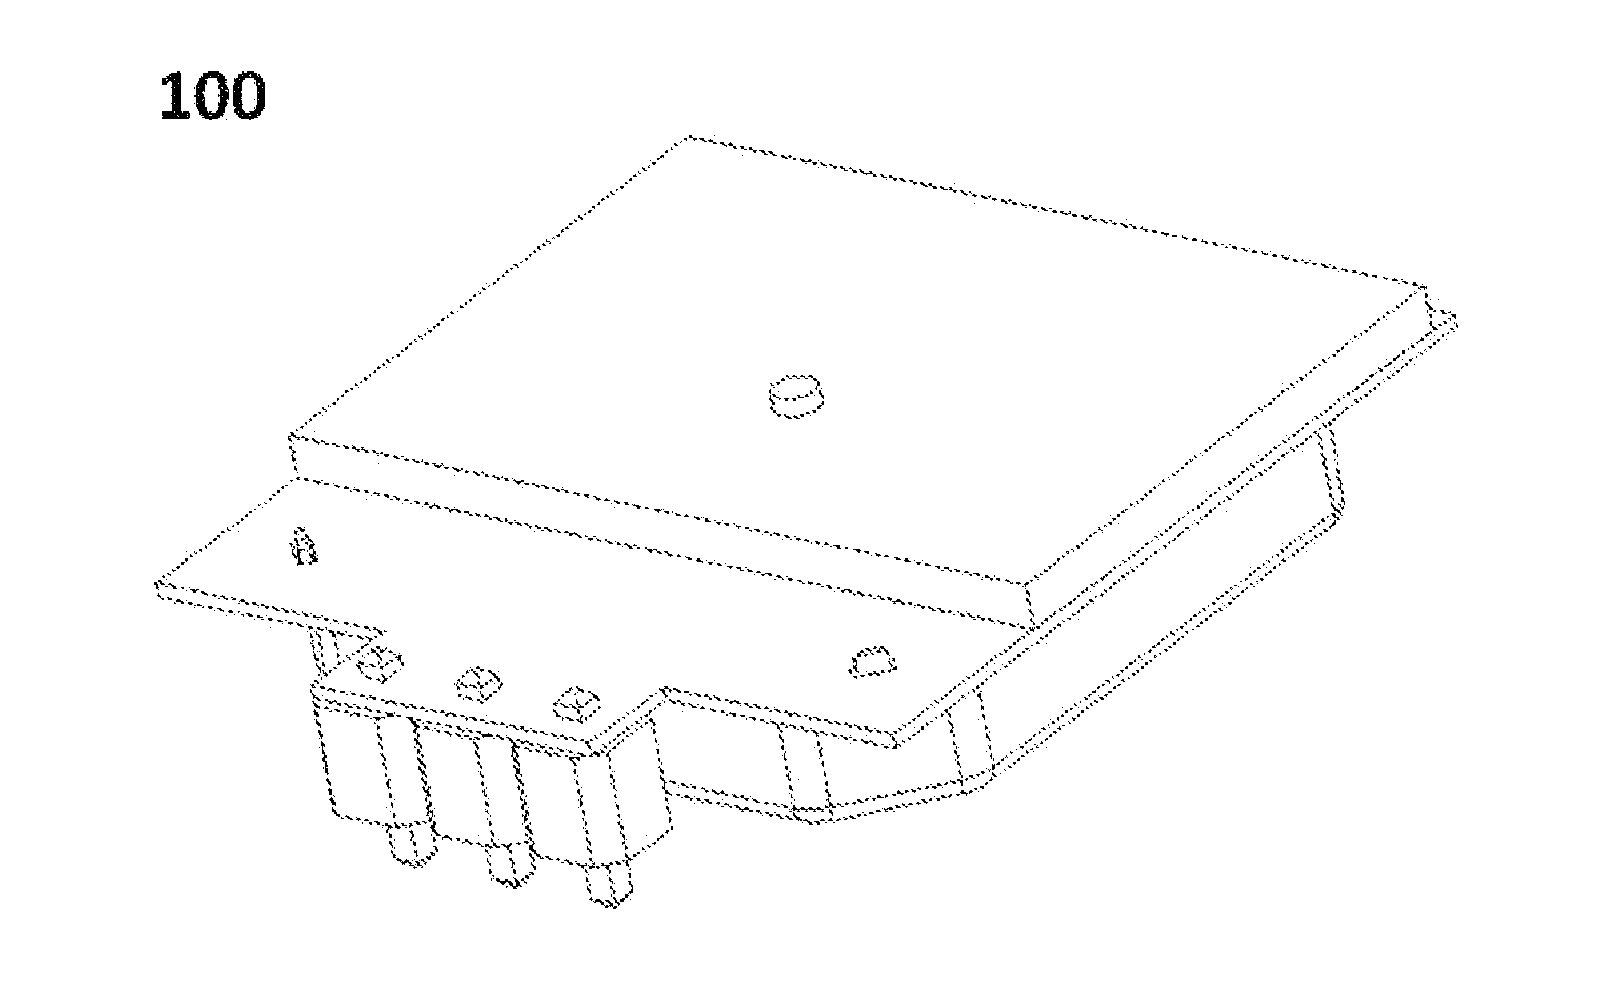 Planar antenna microwave module